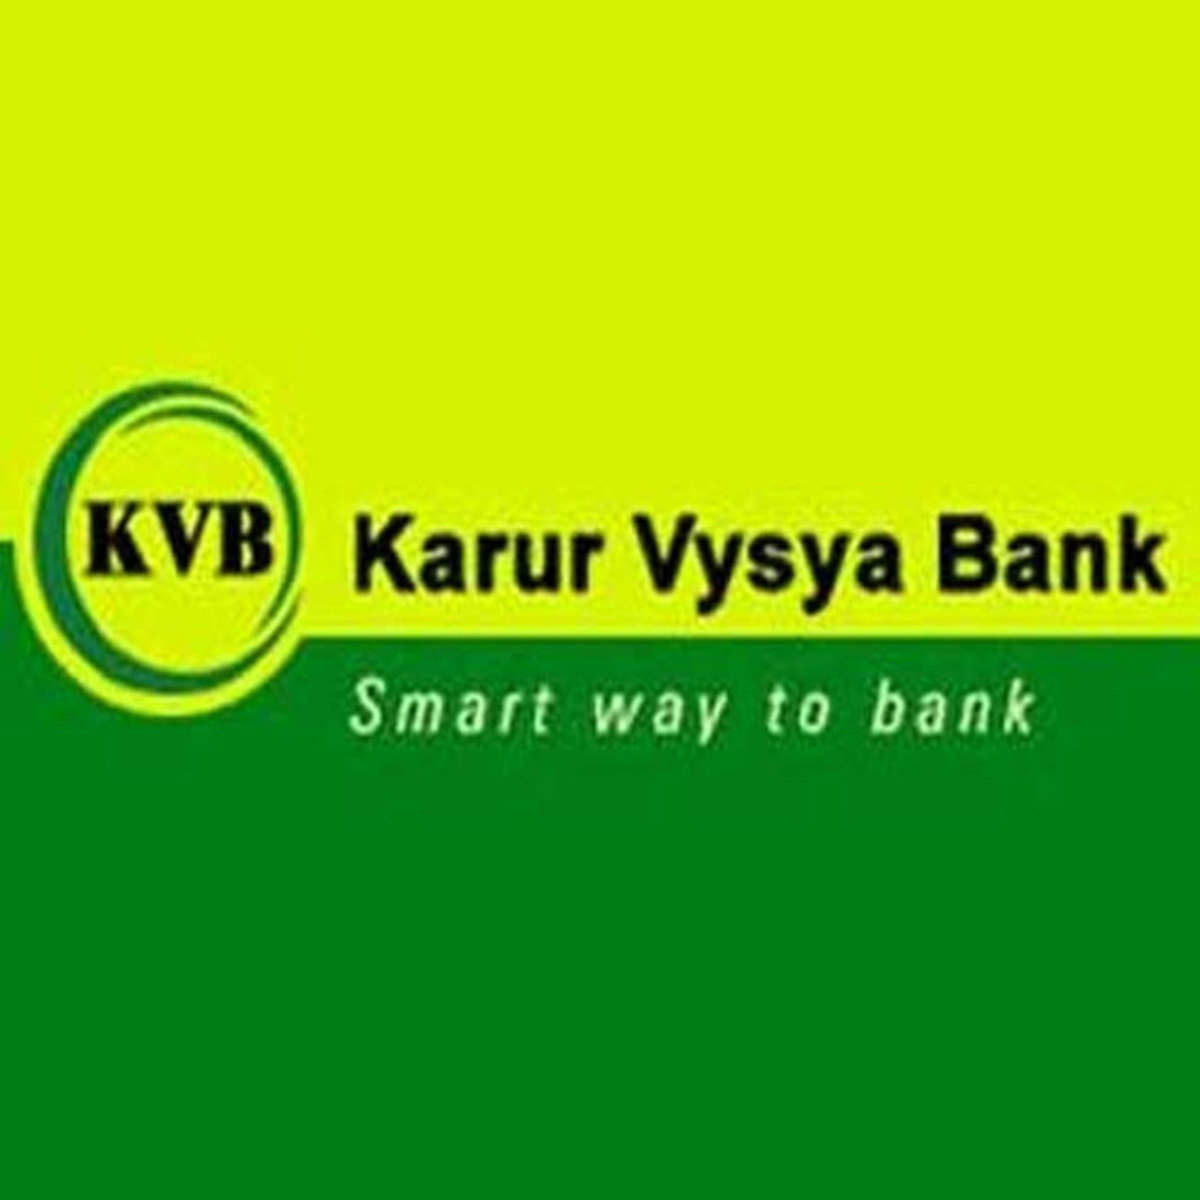 Karur Vysya Bank 794th branch opened in Addanki